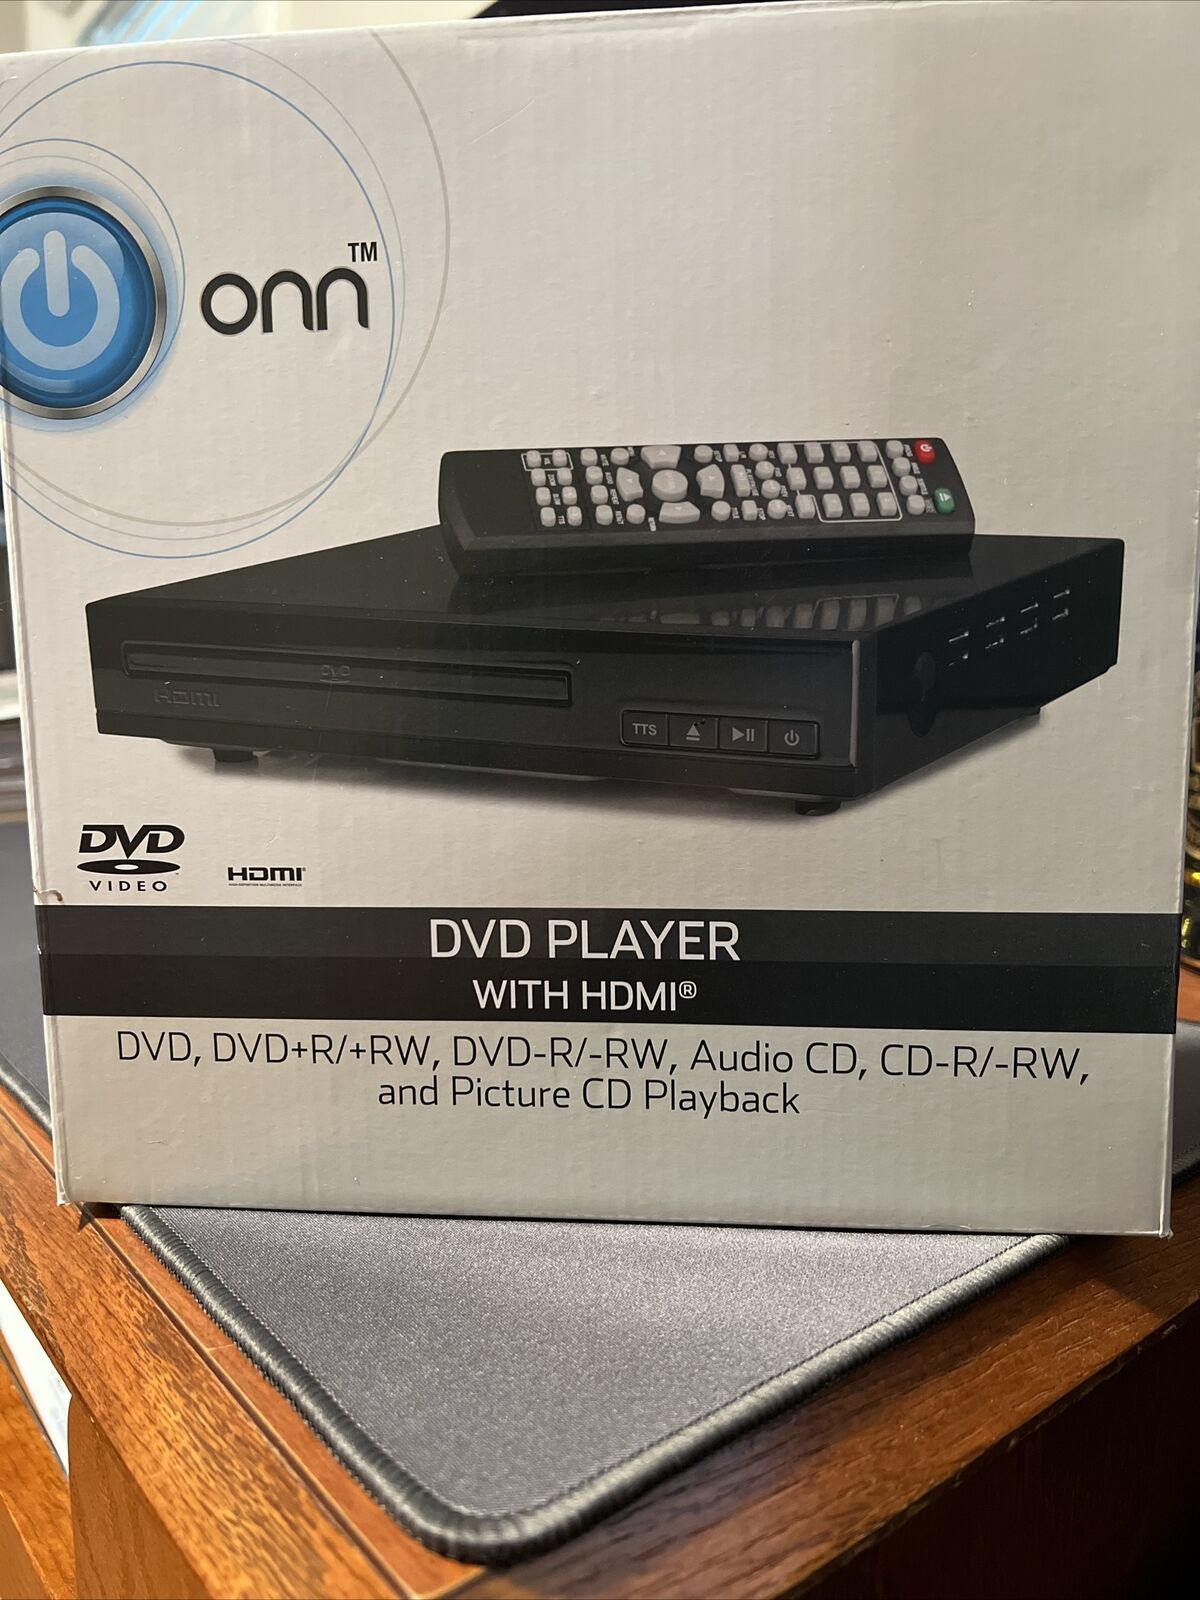 Onn DVD Player w/ Remote & HDMI (DVD+R/DVD-R/-RW/Audio CD/CD-R/Pic CD Playback